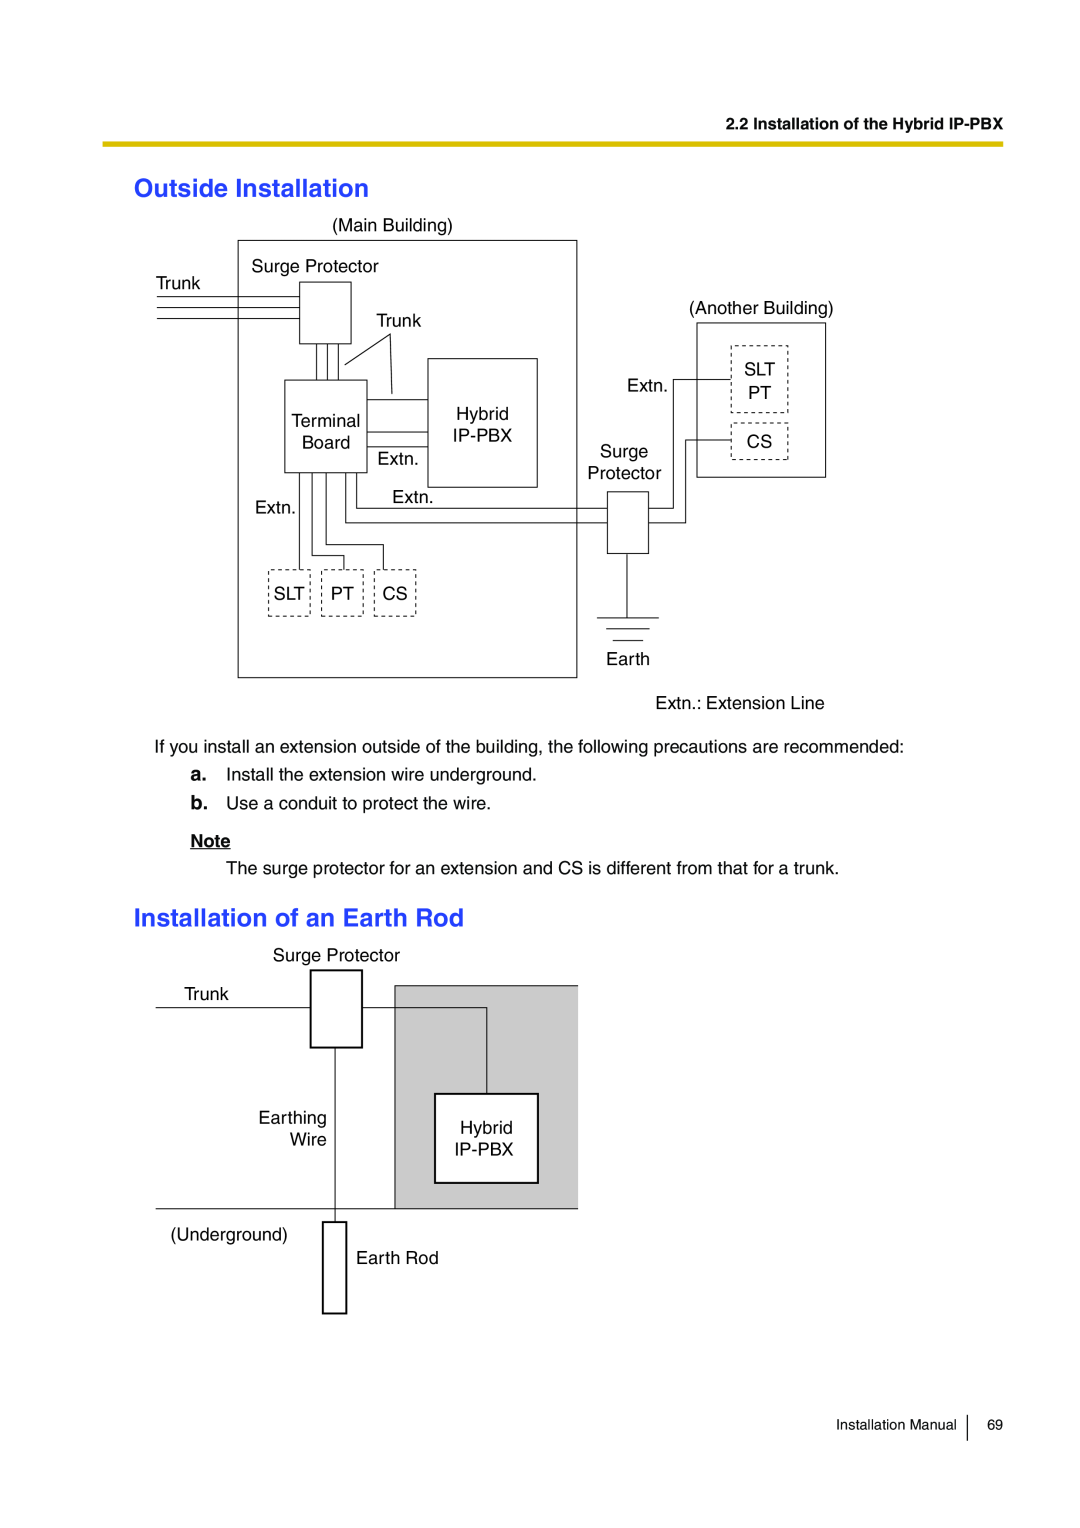 Panasonic KX-TDA100 installation manual Outside Installation, Installation of an Earth Rod 